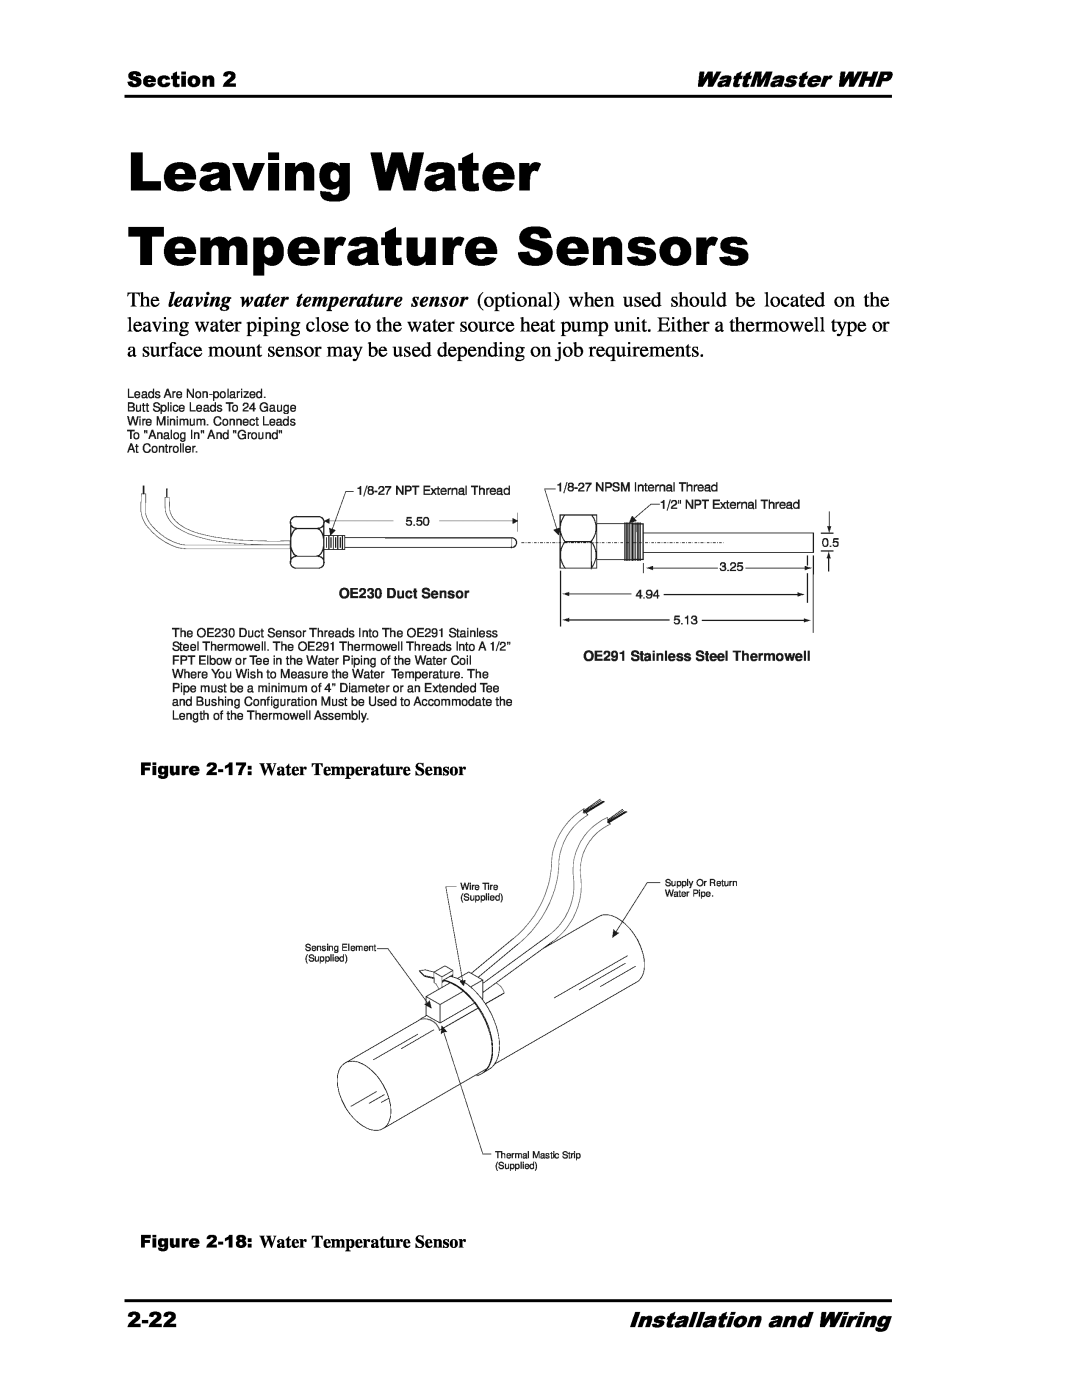 Heat Controller Water Source Heat Pump manual Leaving Water Temperature Sensors, 2Figure-22, 17, Section, WattMaster WHP 